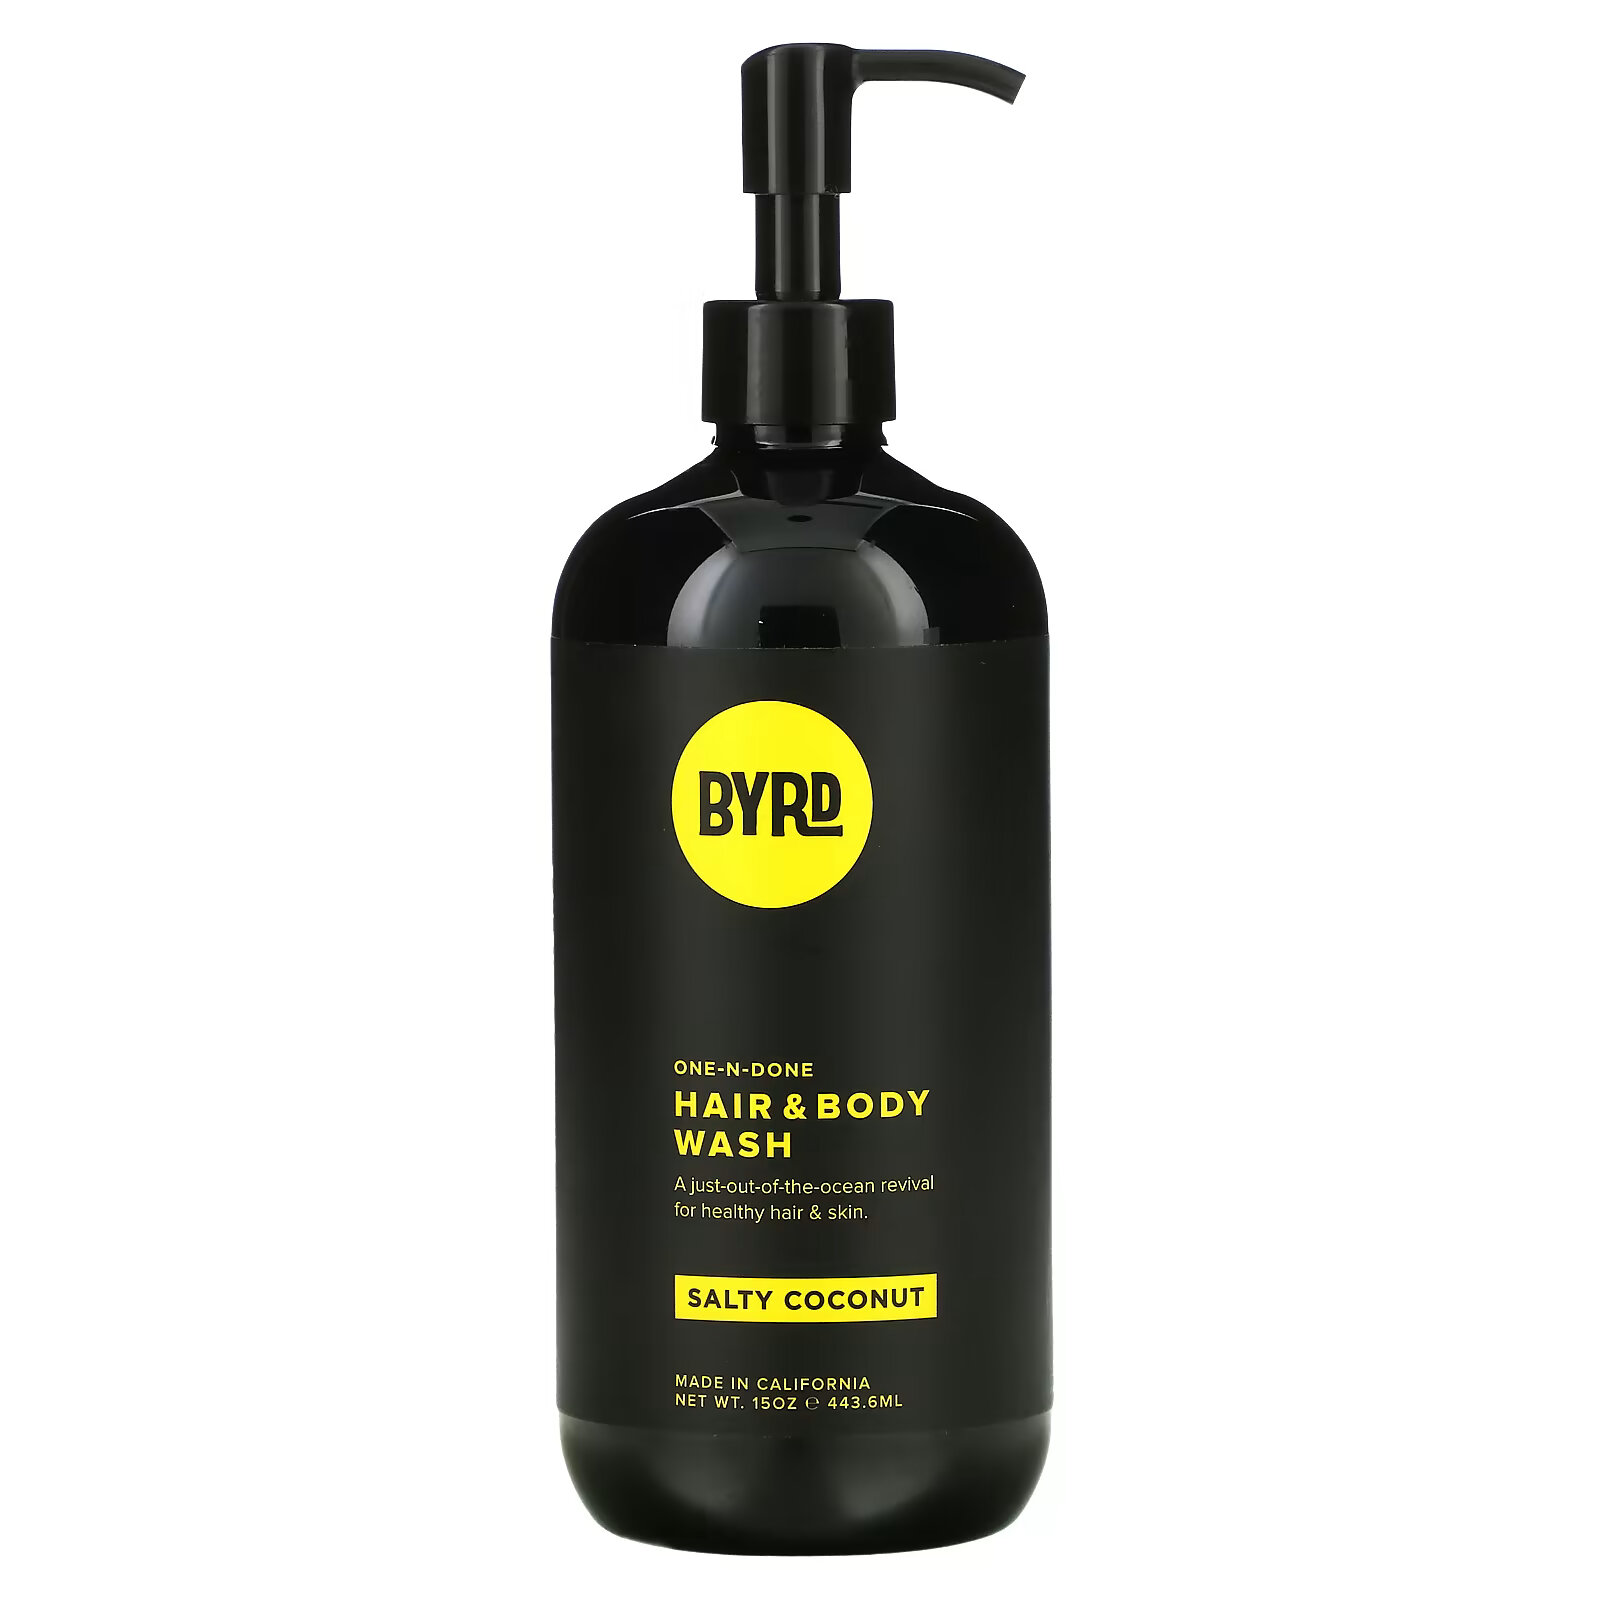 Byrd Hairdo Products, One-N-Done, гель для душа и волос, с соленым кокосом, 443,6 мл (15 унций) цена и фото